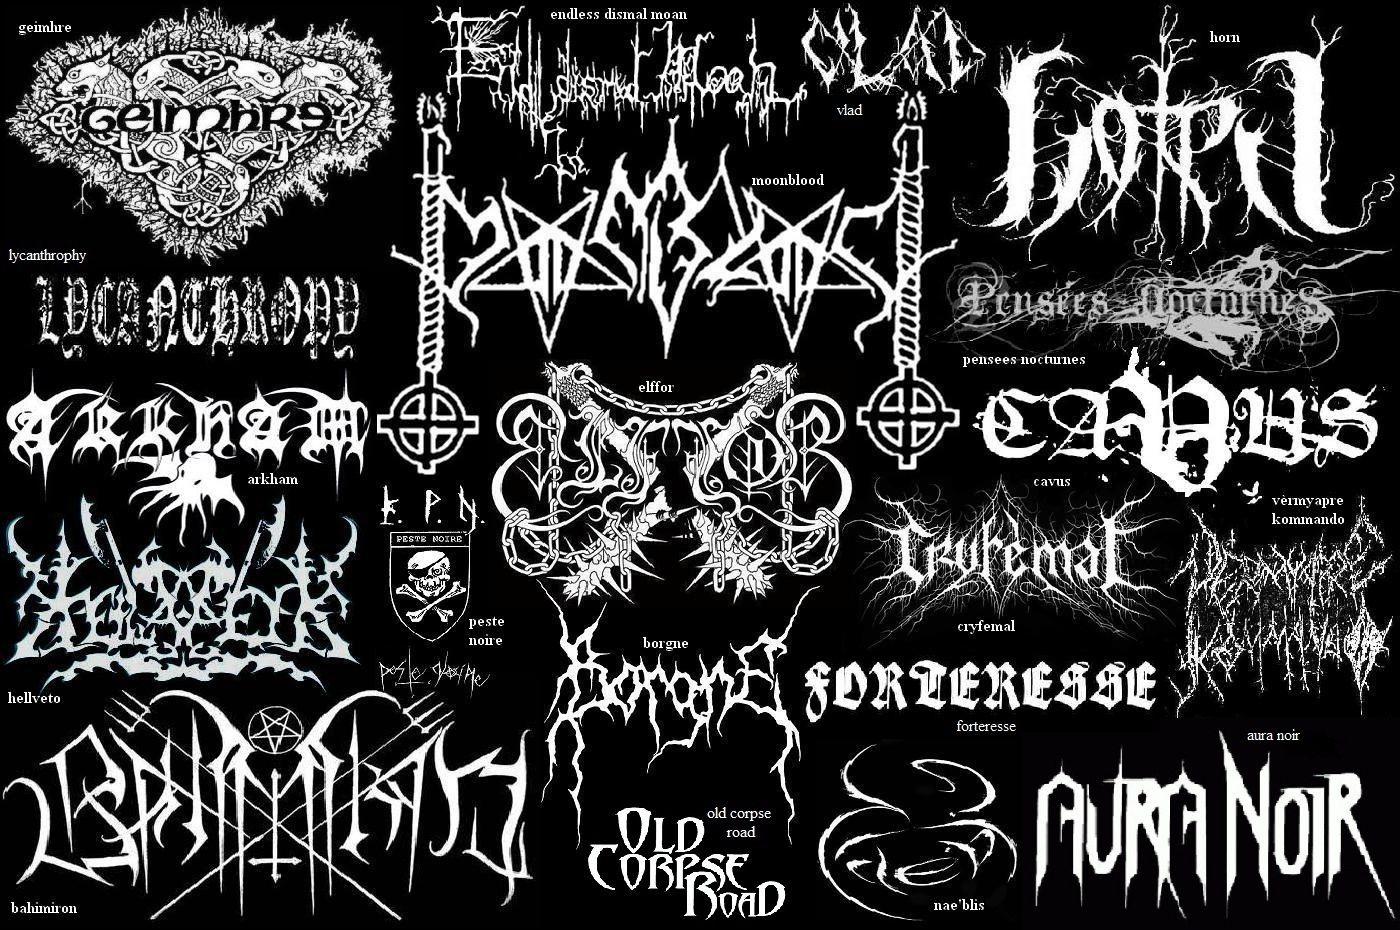 Black AMD White Band Logo - may the devil take us: Black Metal Band Logos [Part II]